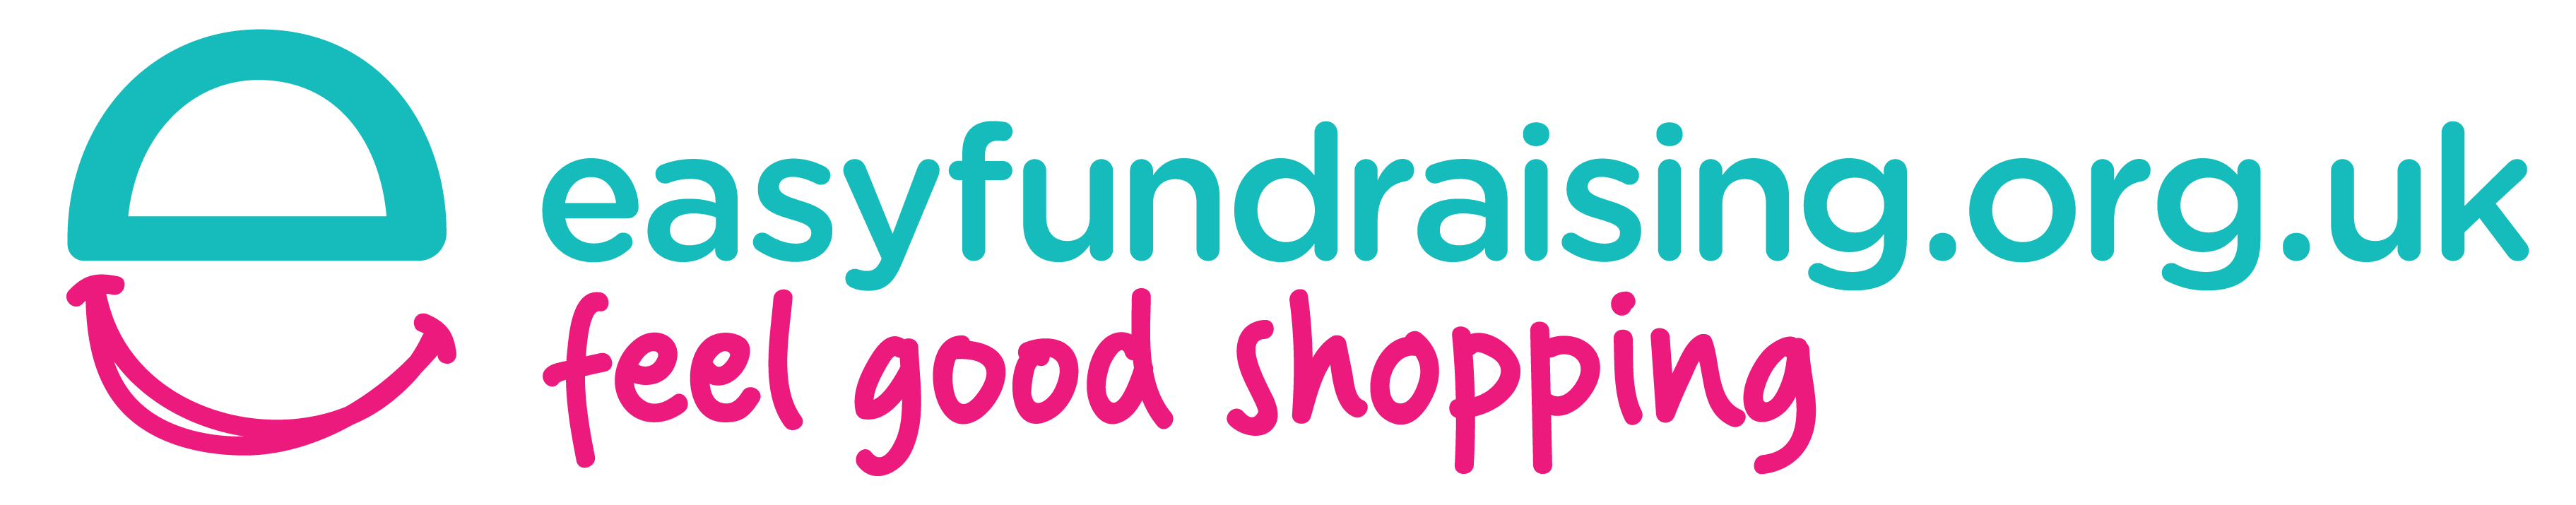 Image result for easyfundraising logo